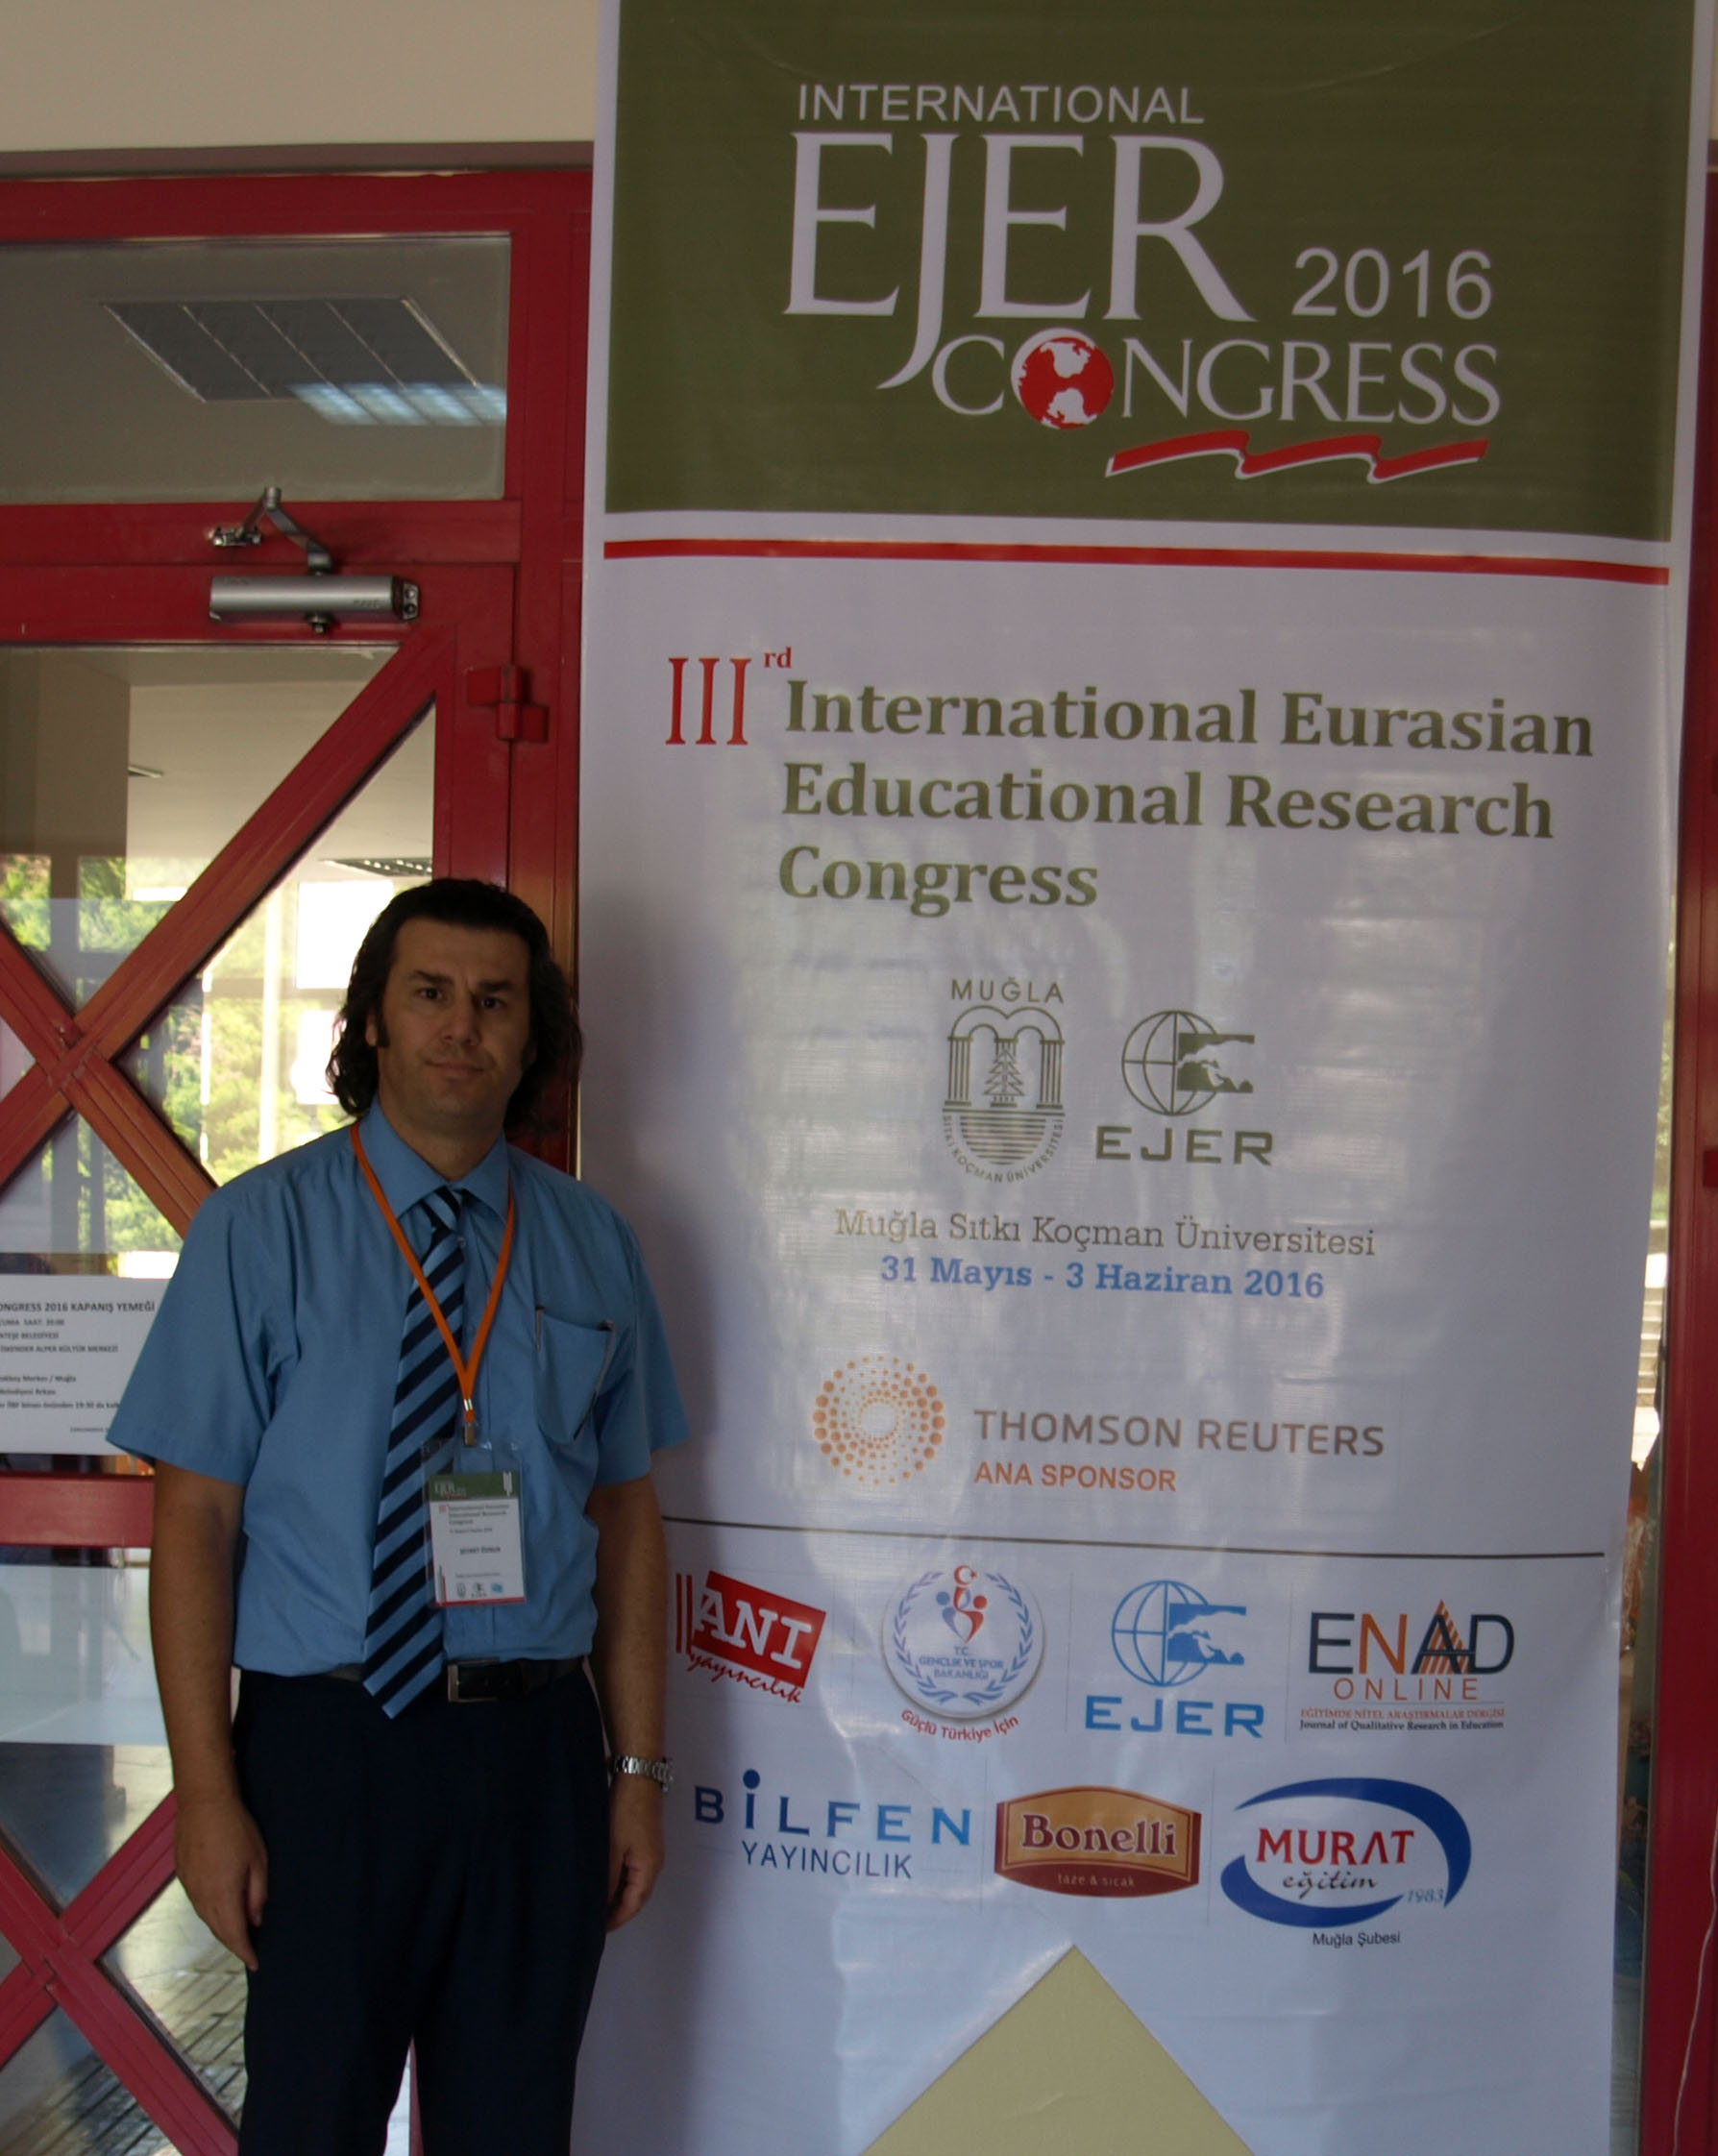 NEU has been represented at the EJER Congress 2016